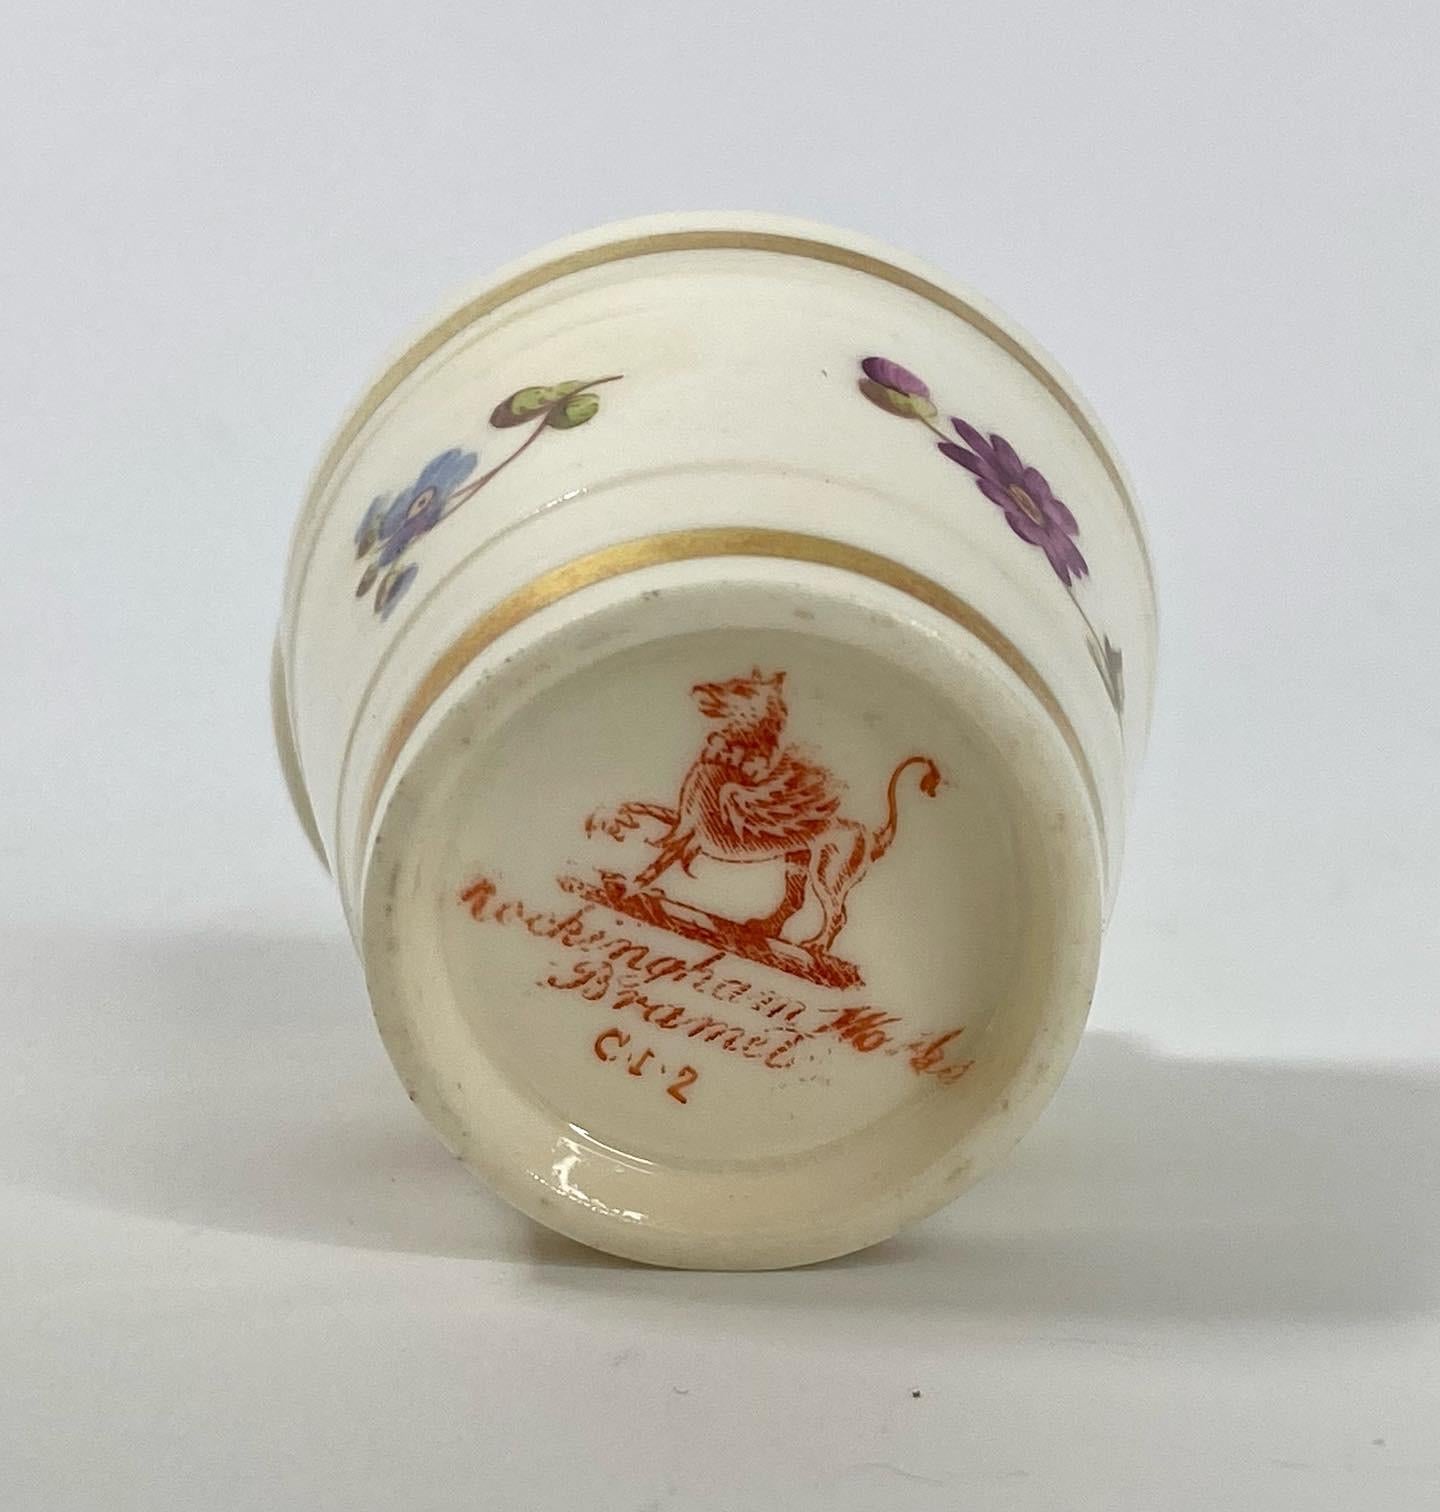 Fired Rockingham porcelain ‘Toy bucket’, 1826 - 1830.